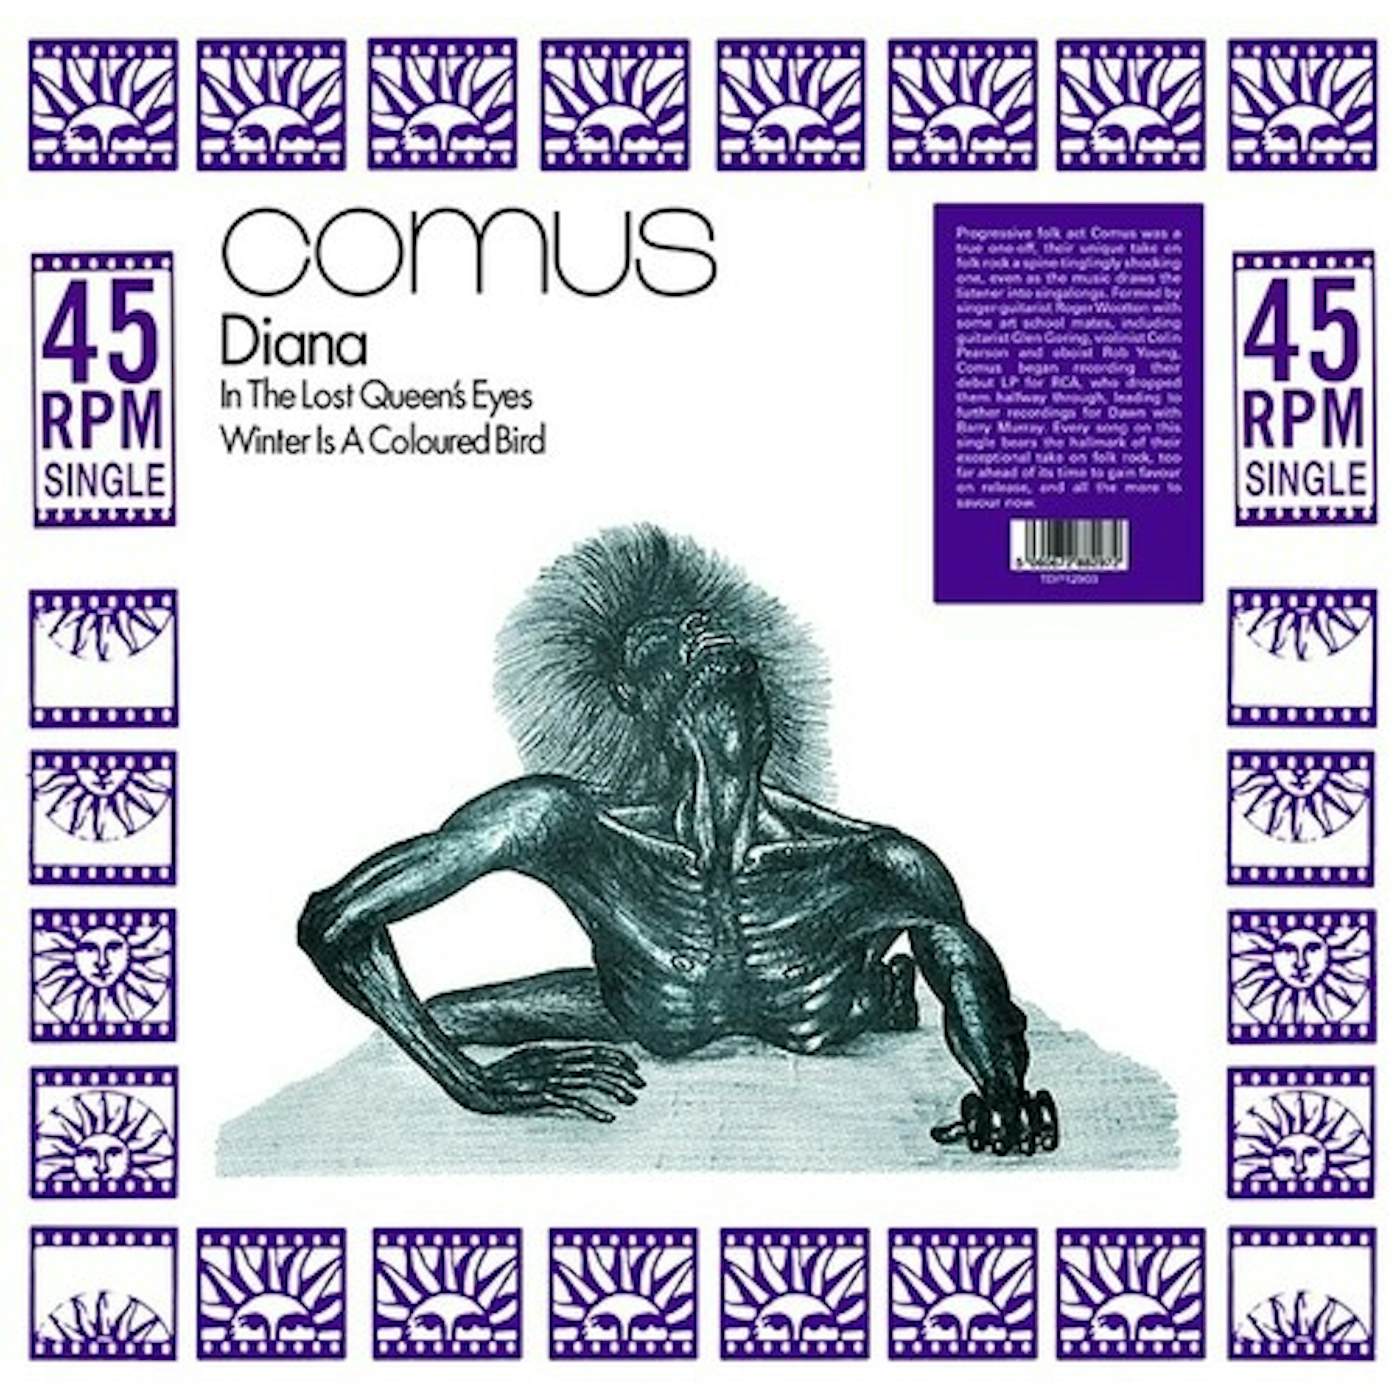 Comus Diana Vinyl Record